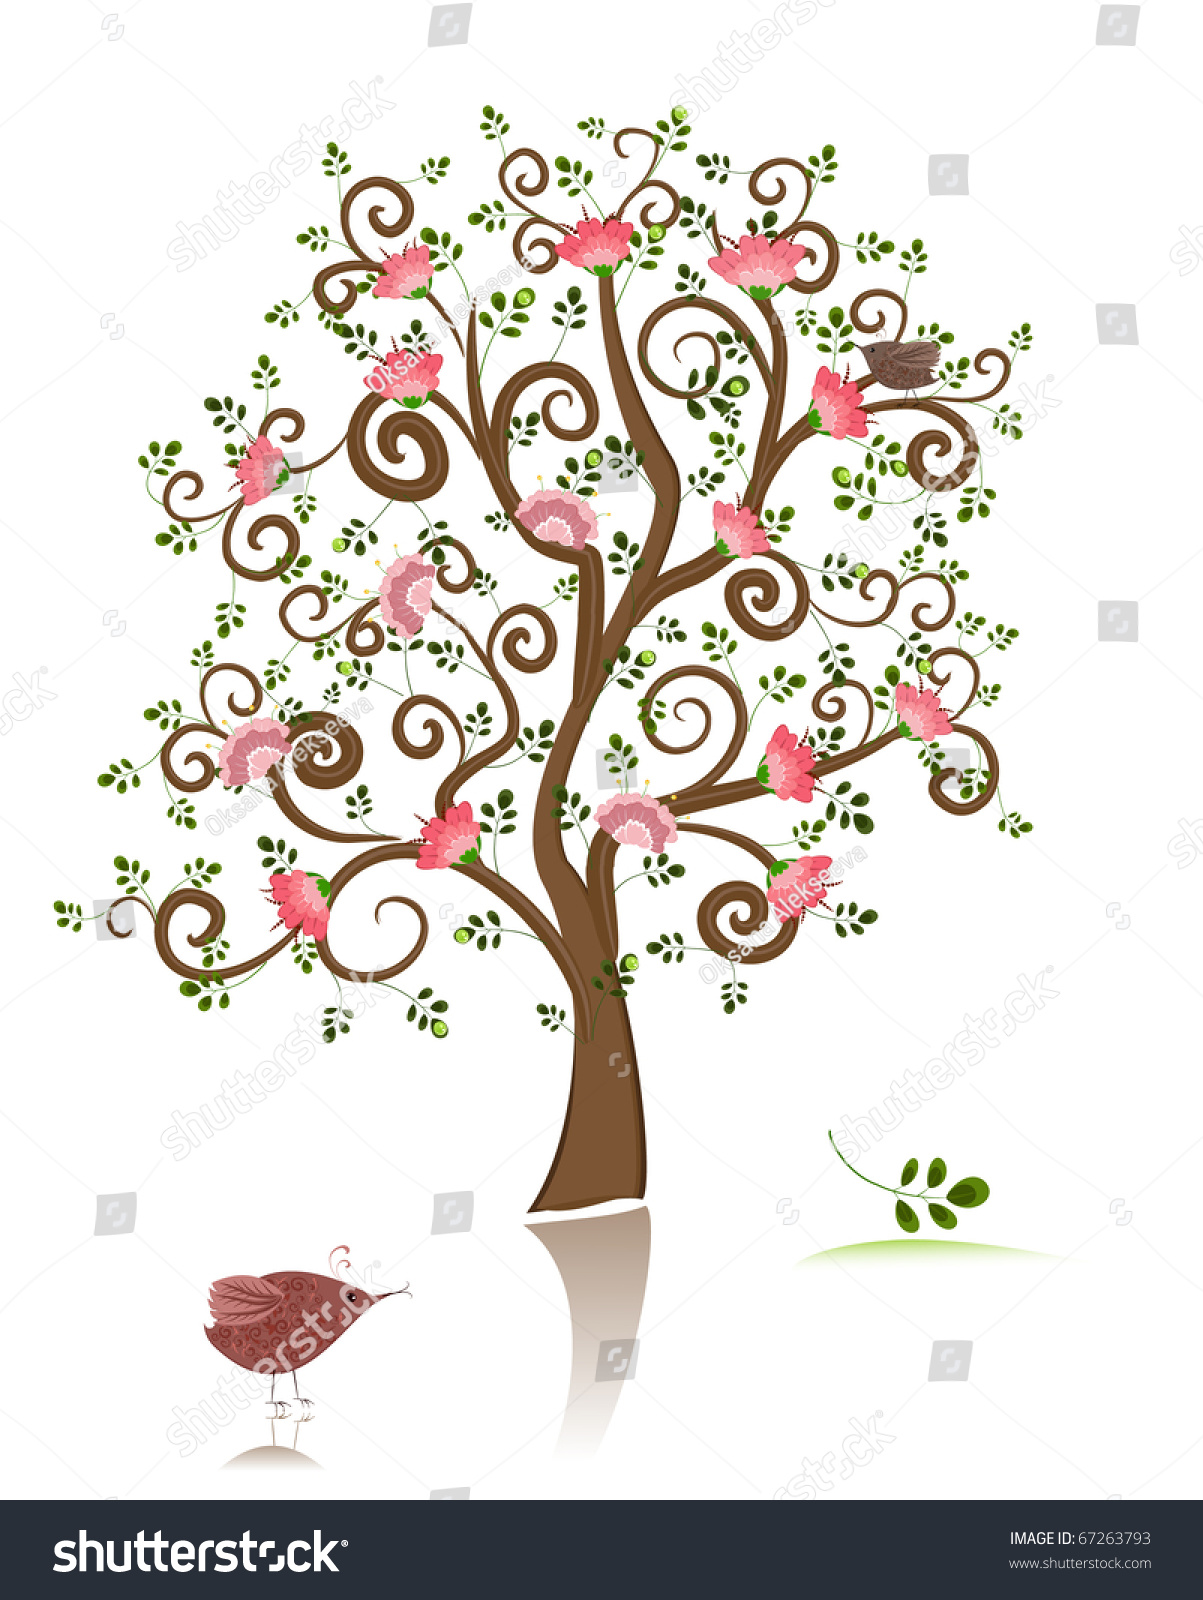 Flowering Ornamental Tree Stock Vector Illustration 67263793 : Shutterstock